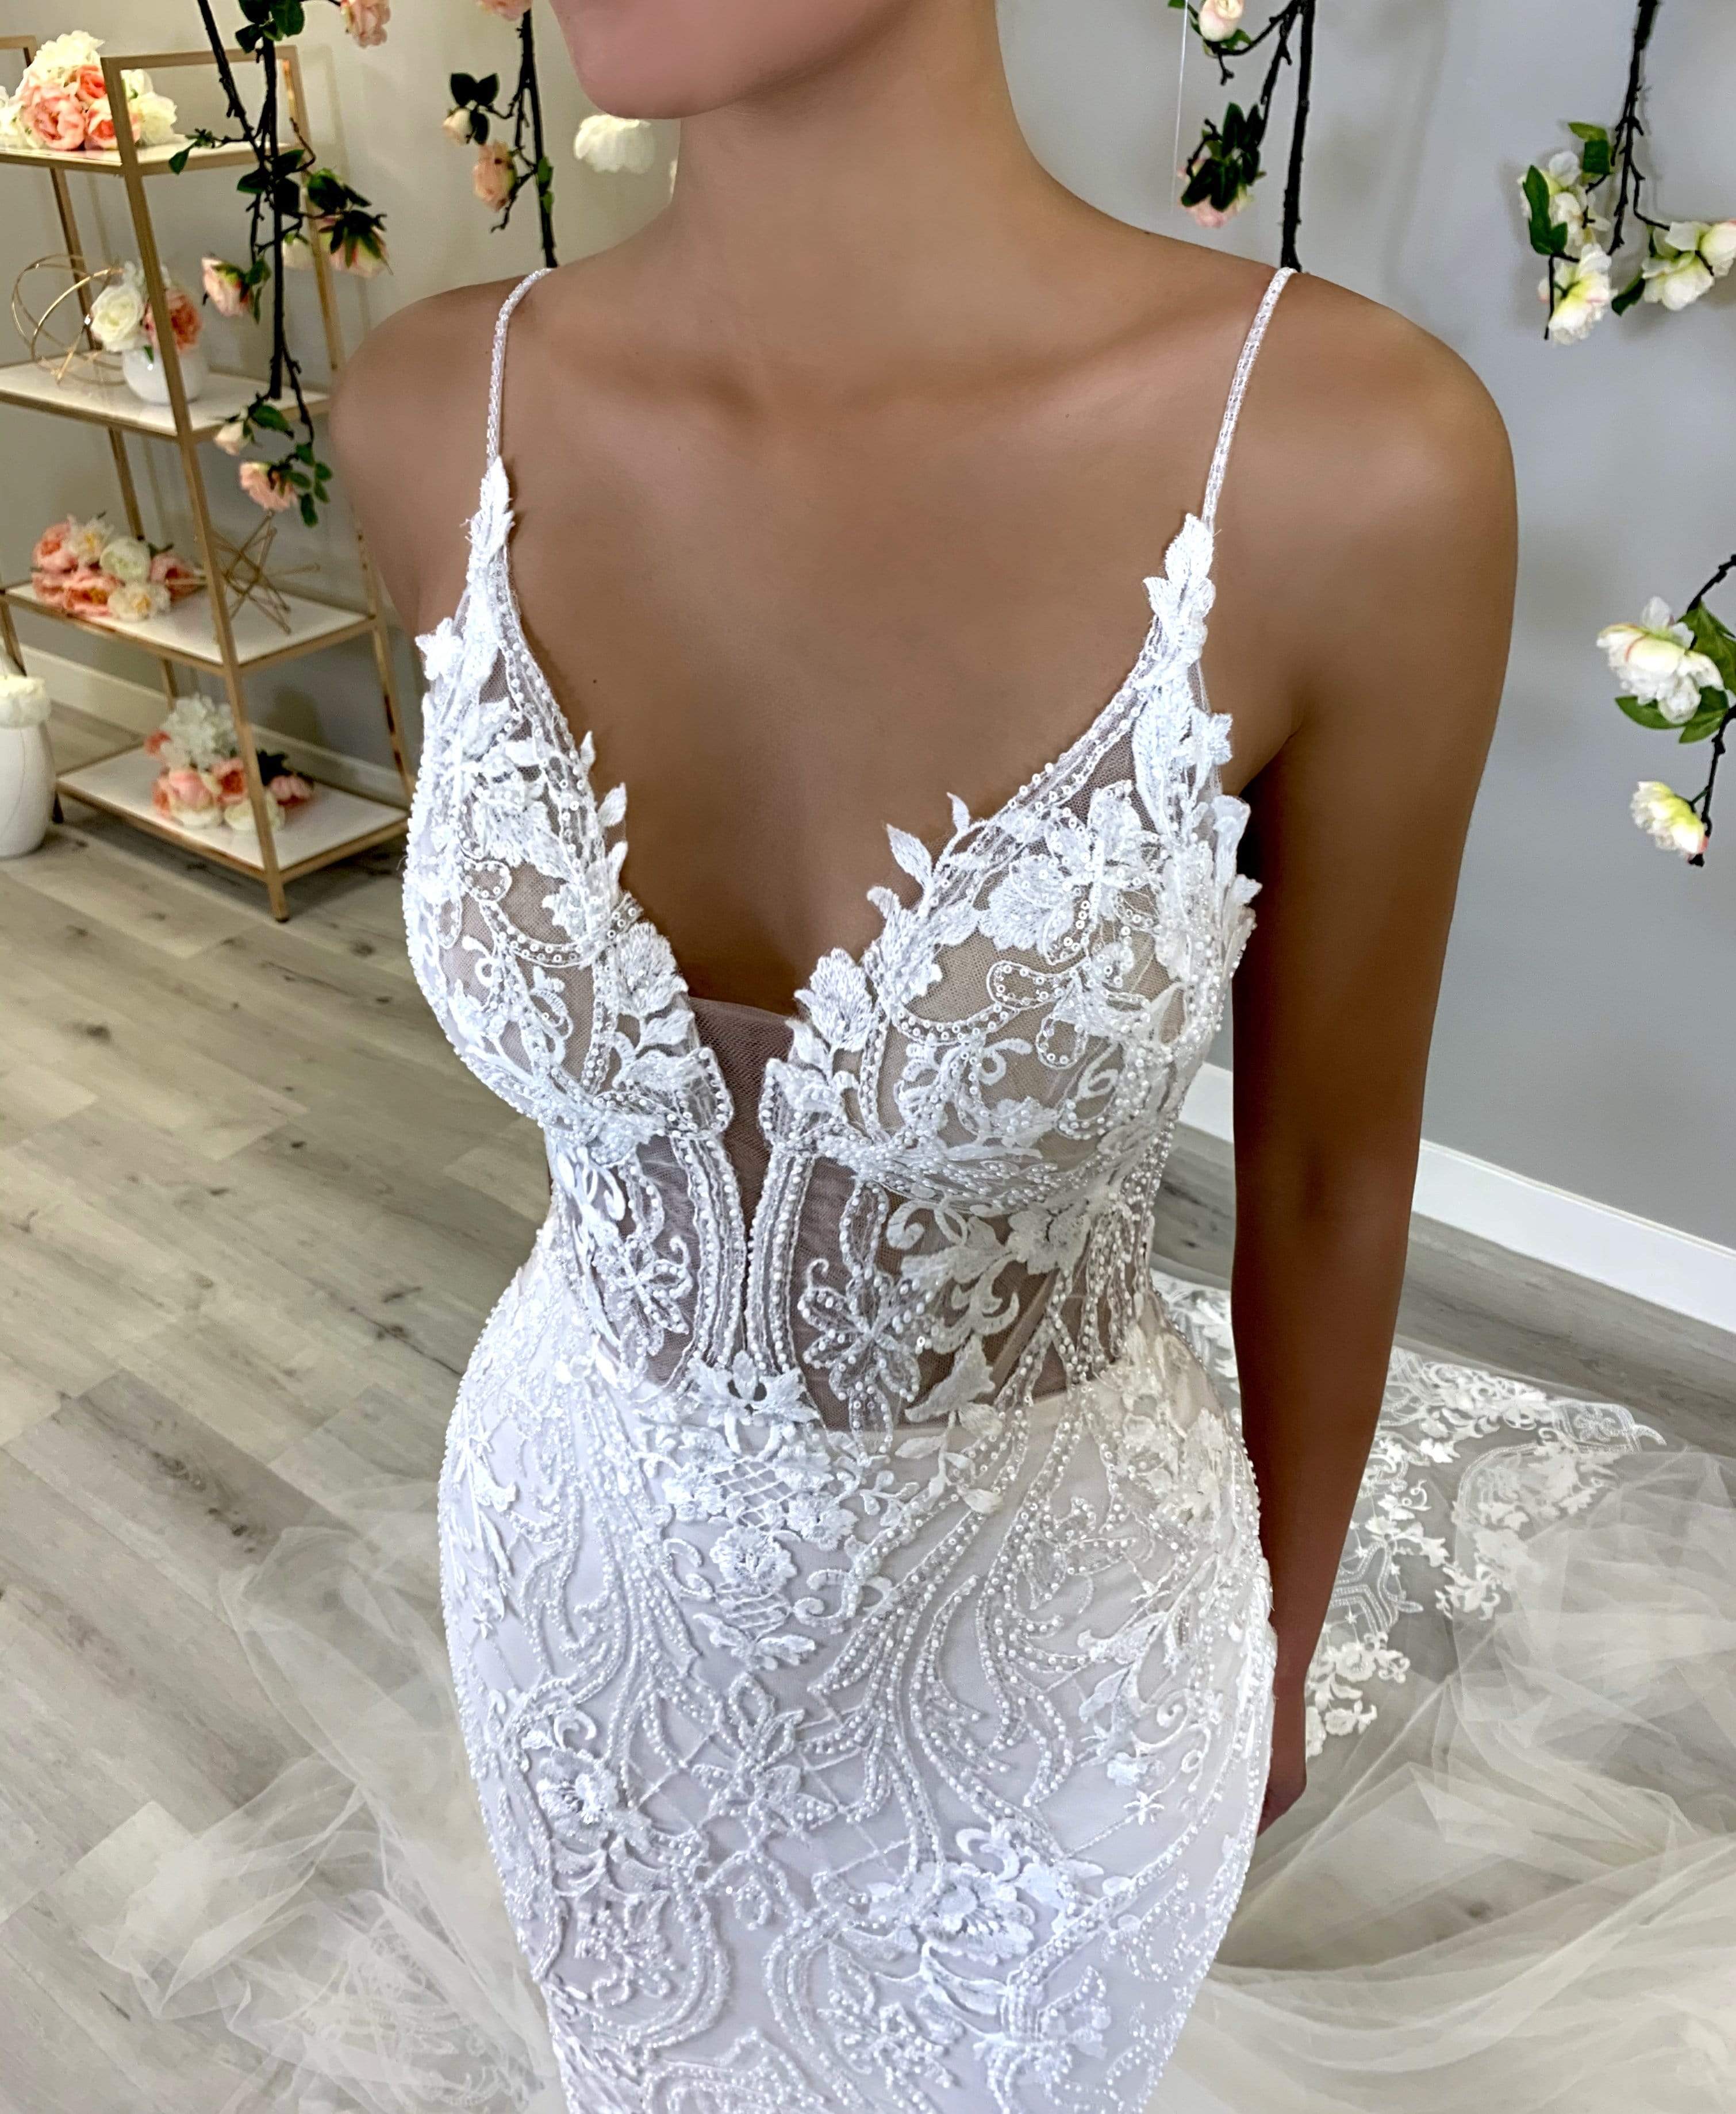 Paisley Wedding Dress Designed by Enzoani Now Available at La Maison Bridal  Boutique